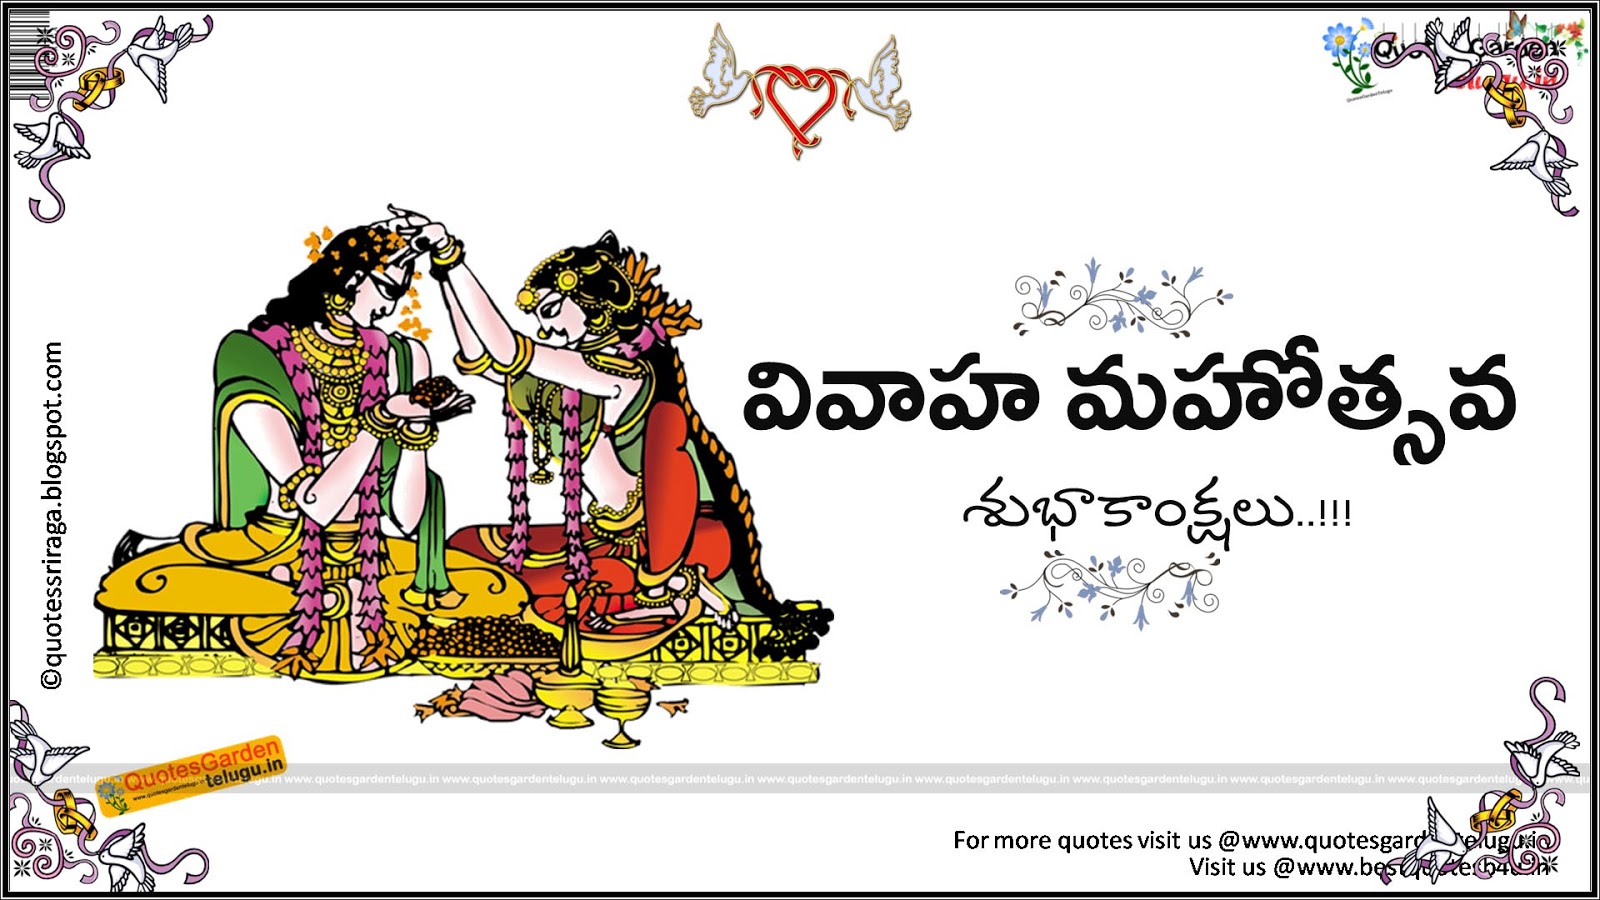 wedding anniversary wishes telugu marriage day greetings in telugu quotes garden telugu